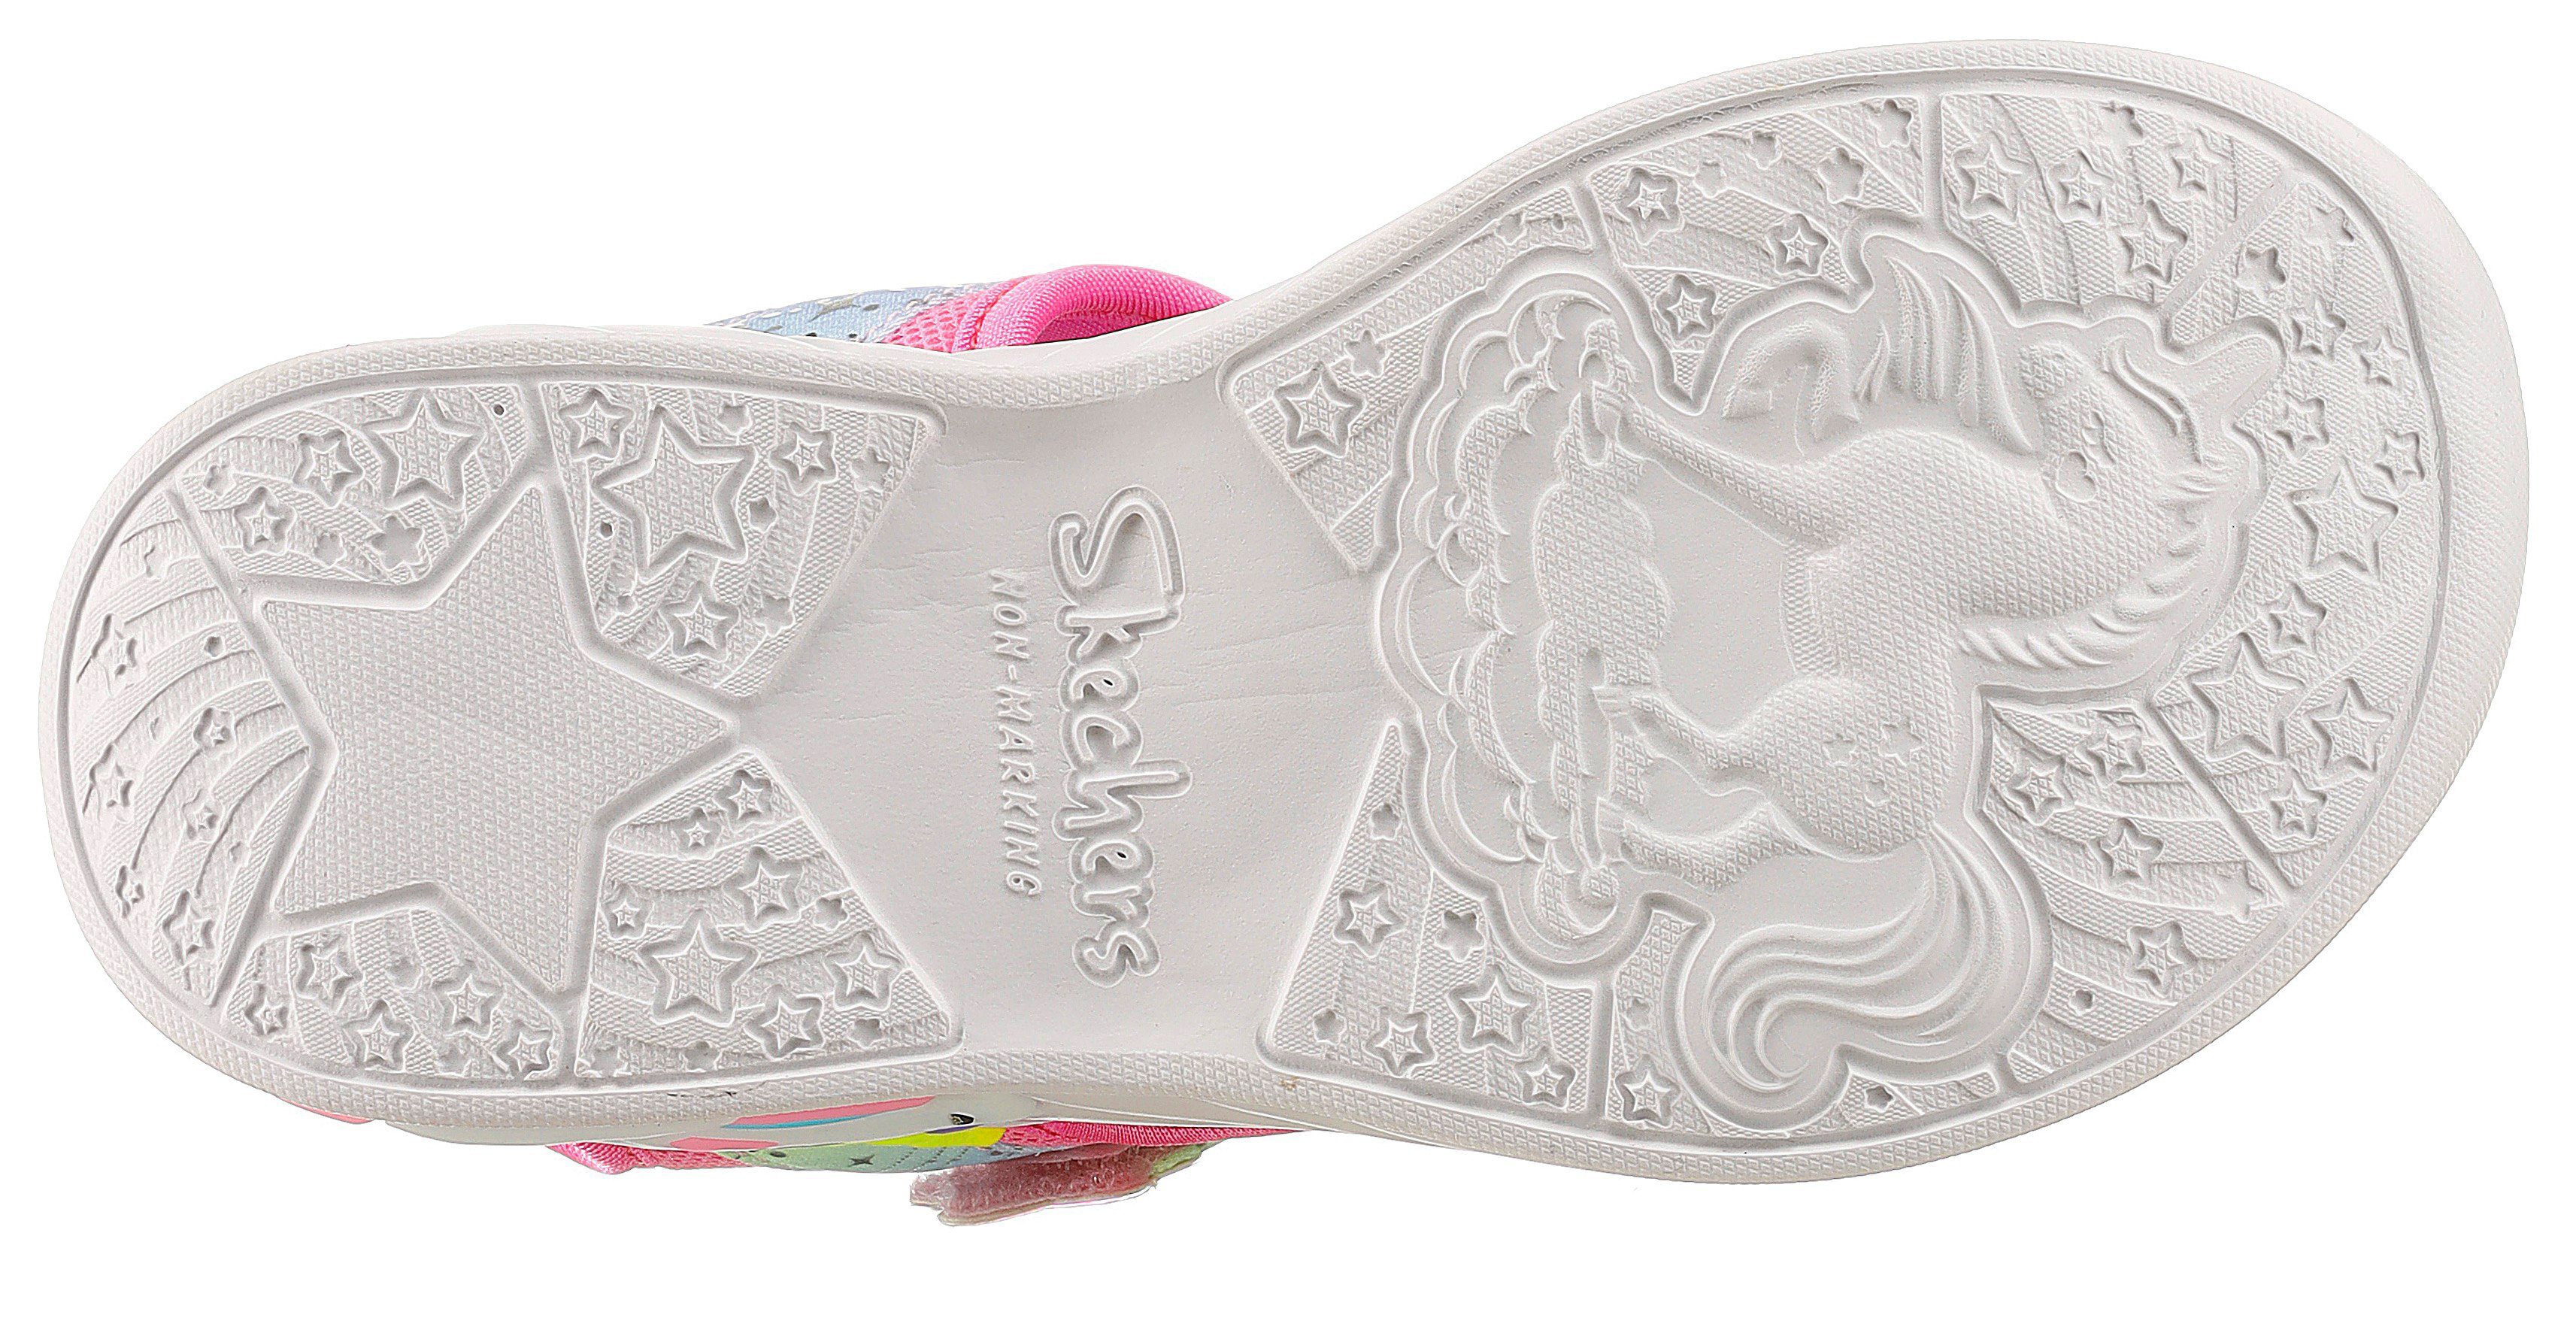 Sandale pink-mintfarben BLISS SANDAL Einhorn-Applikation Kids mit blinkender UNICORN DREAMS Skechers MAJESTIC